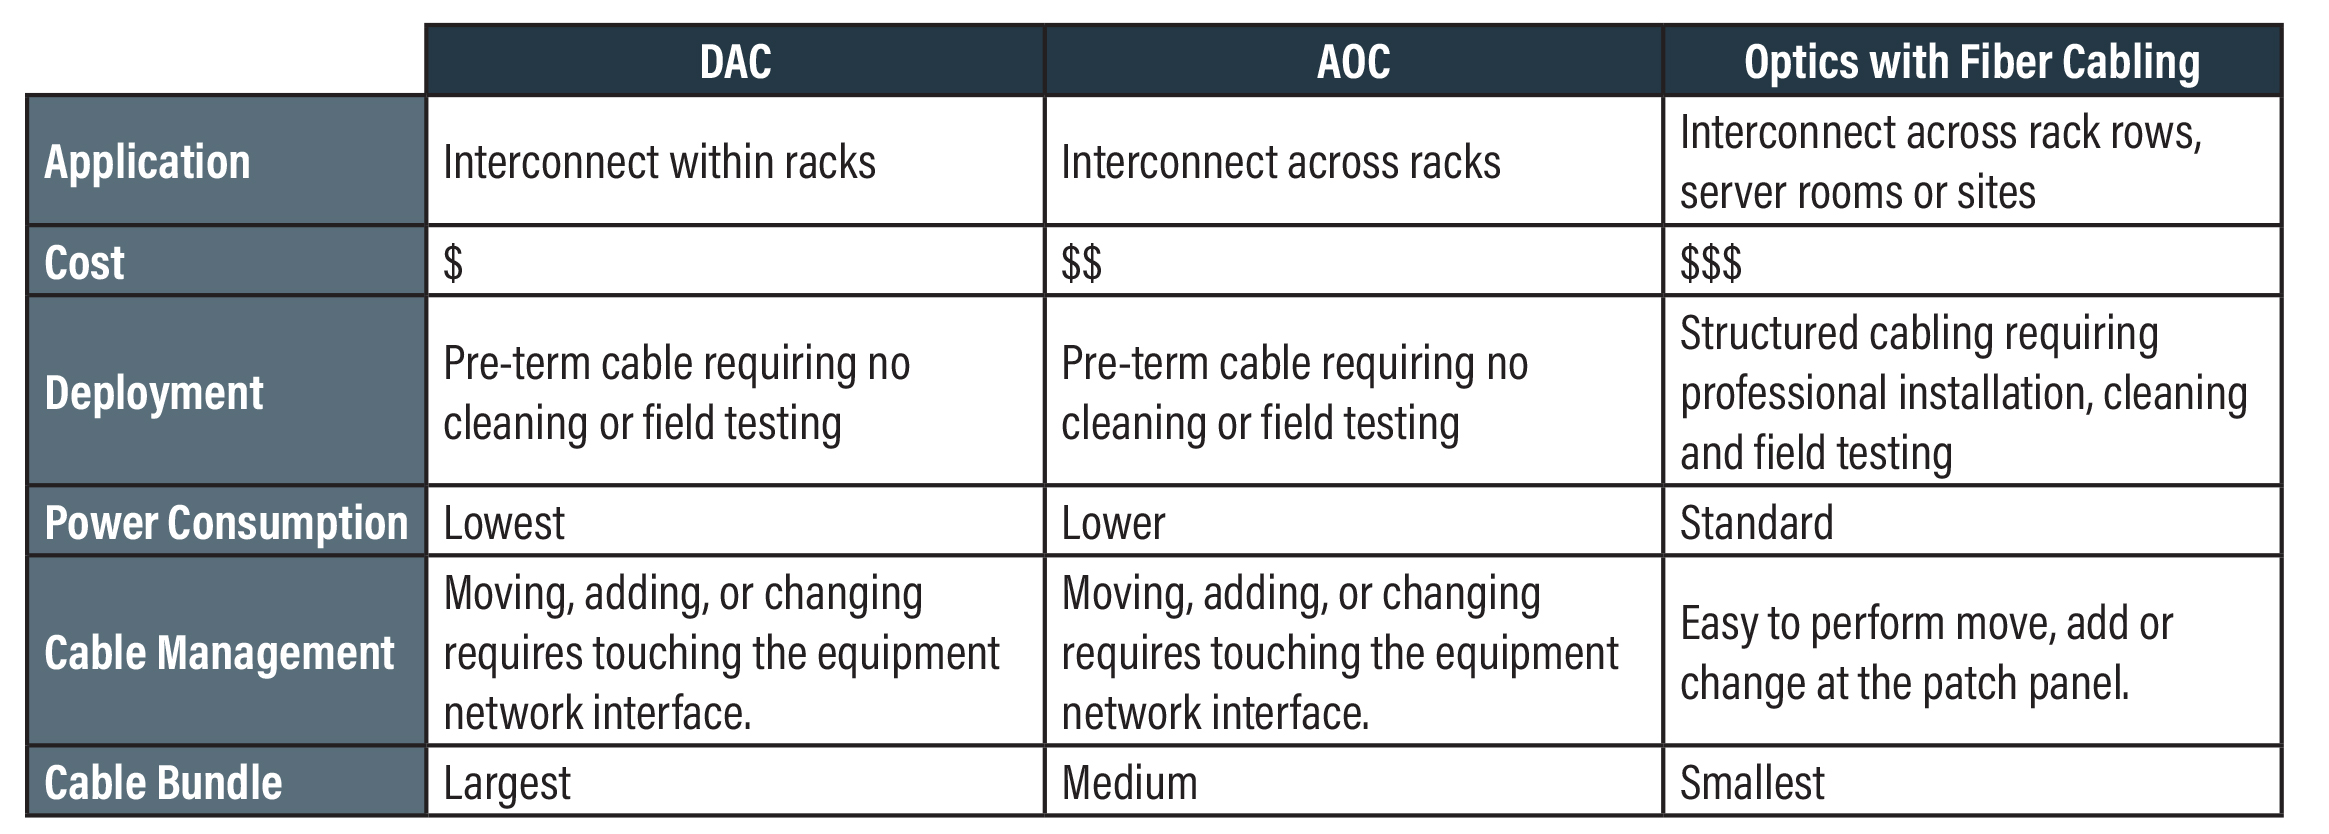 A table comparing DACs and AOCs using optics plus fiber cablings.